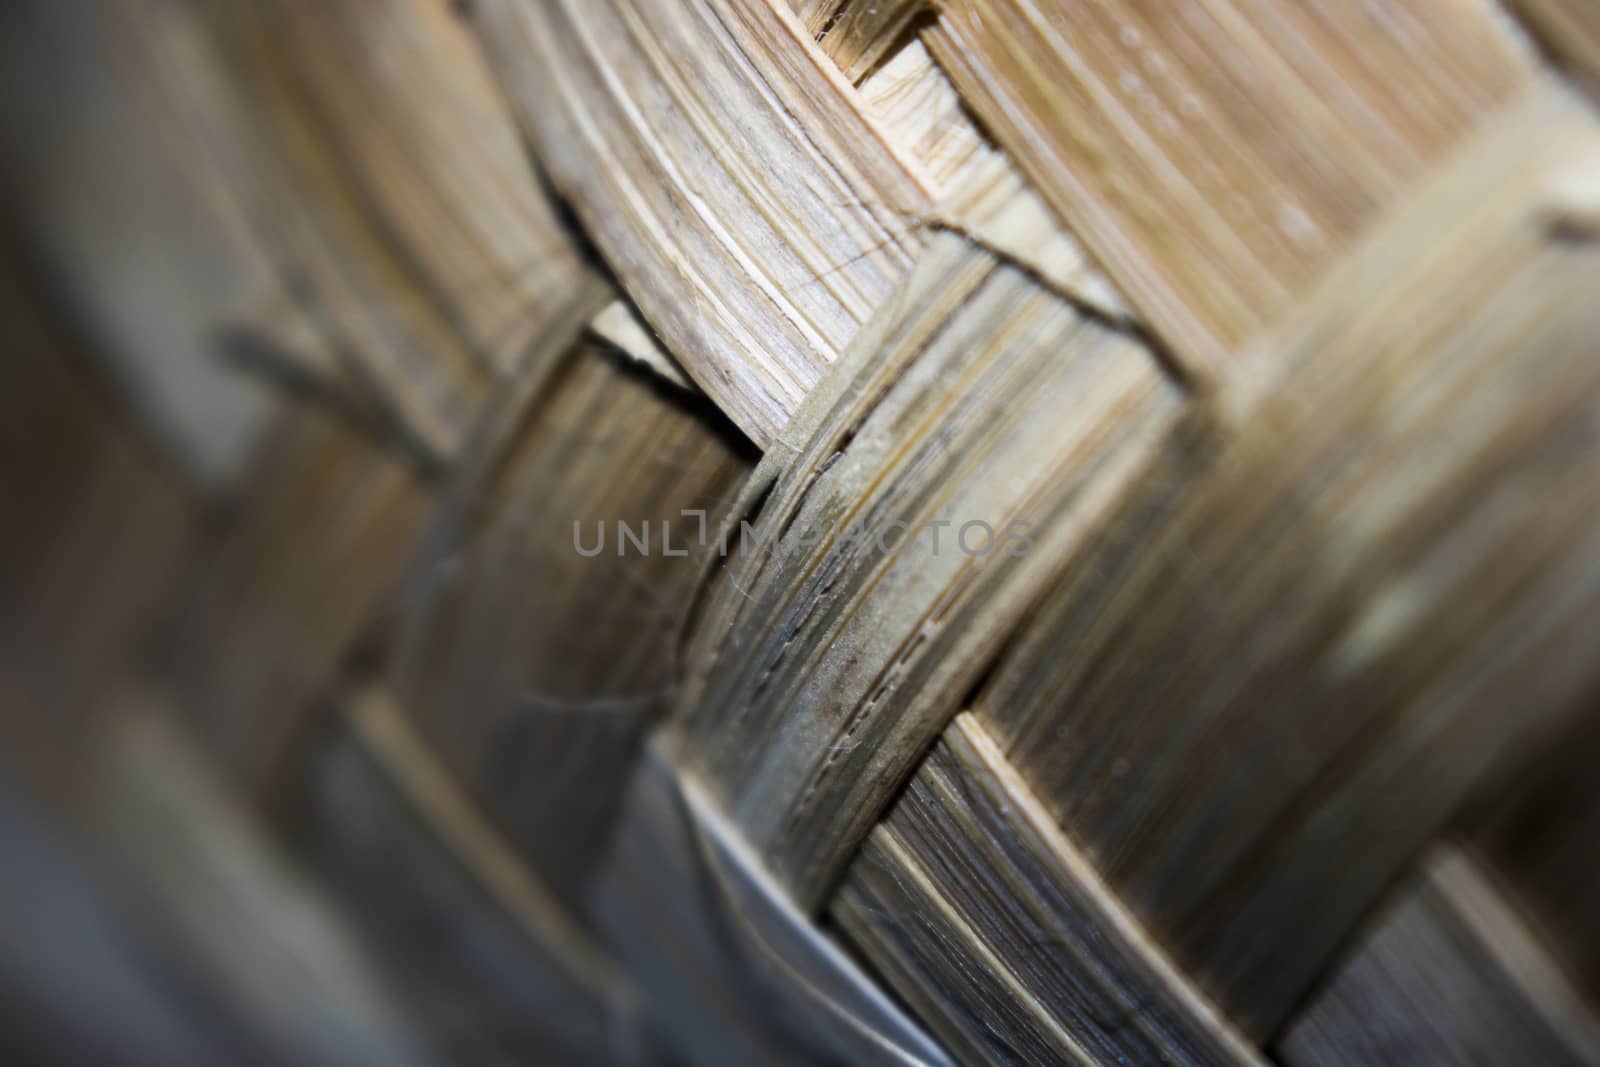 Old bamboo weave mat texture close up single focus photo